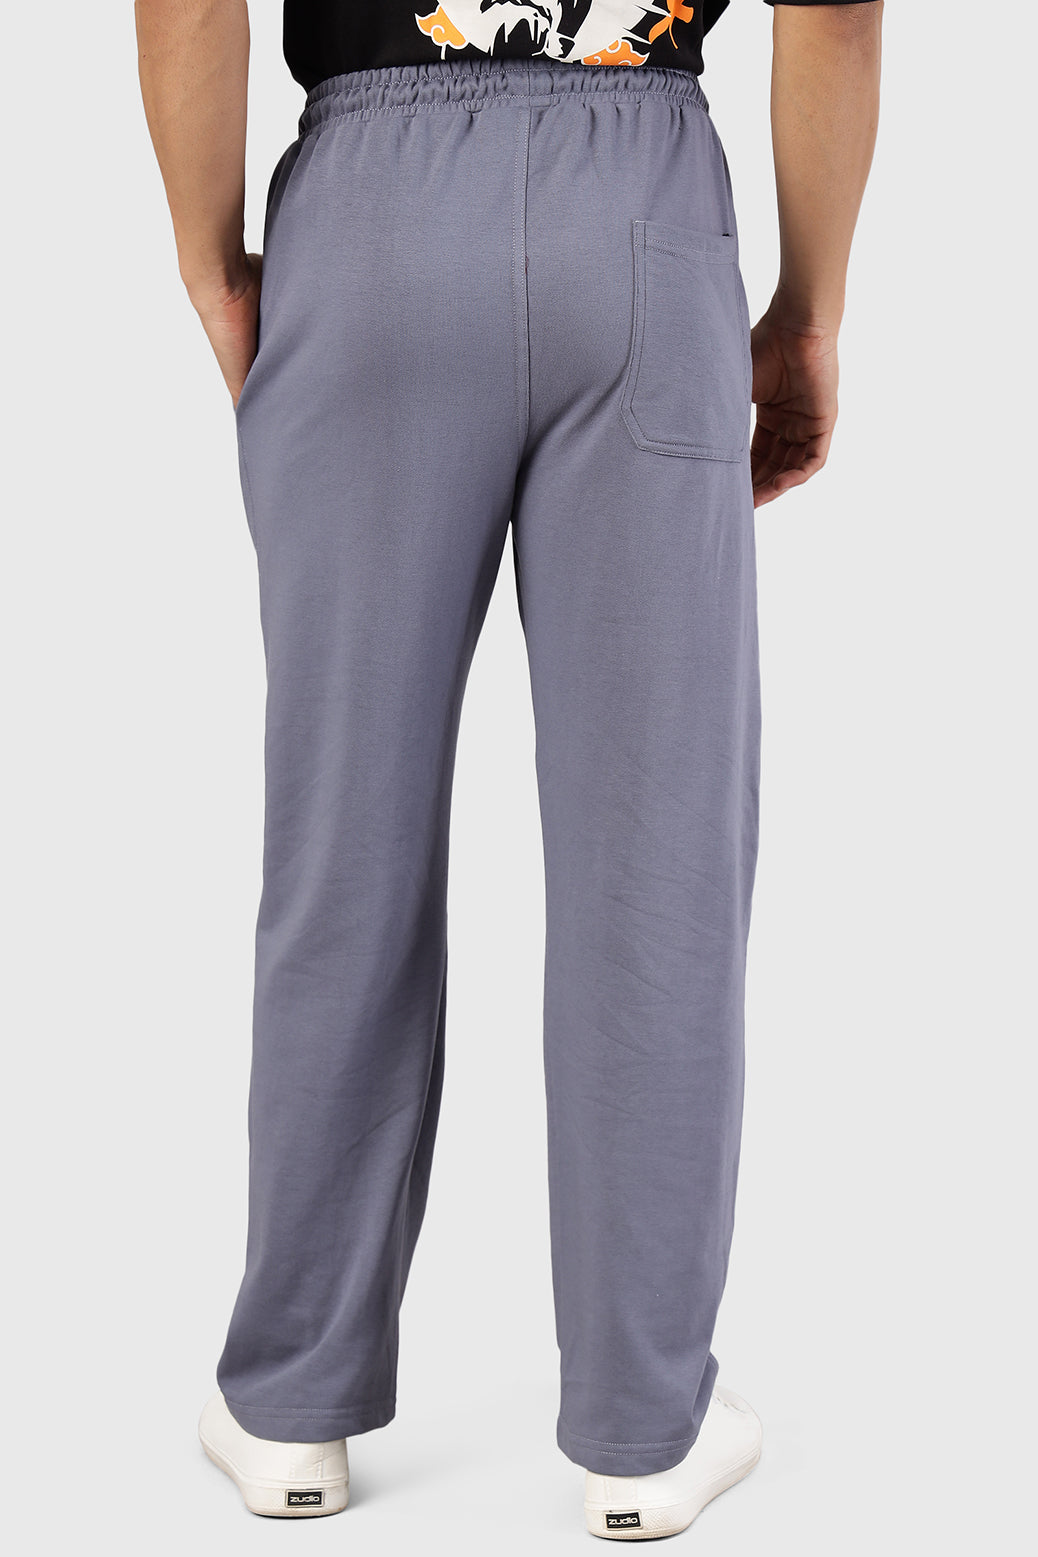 Pinnacle Straight Pants Grey